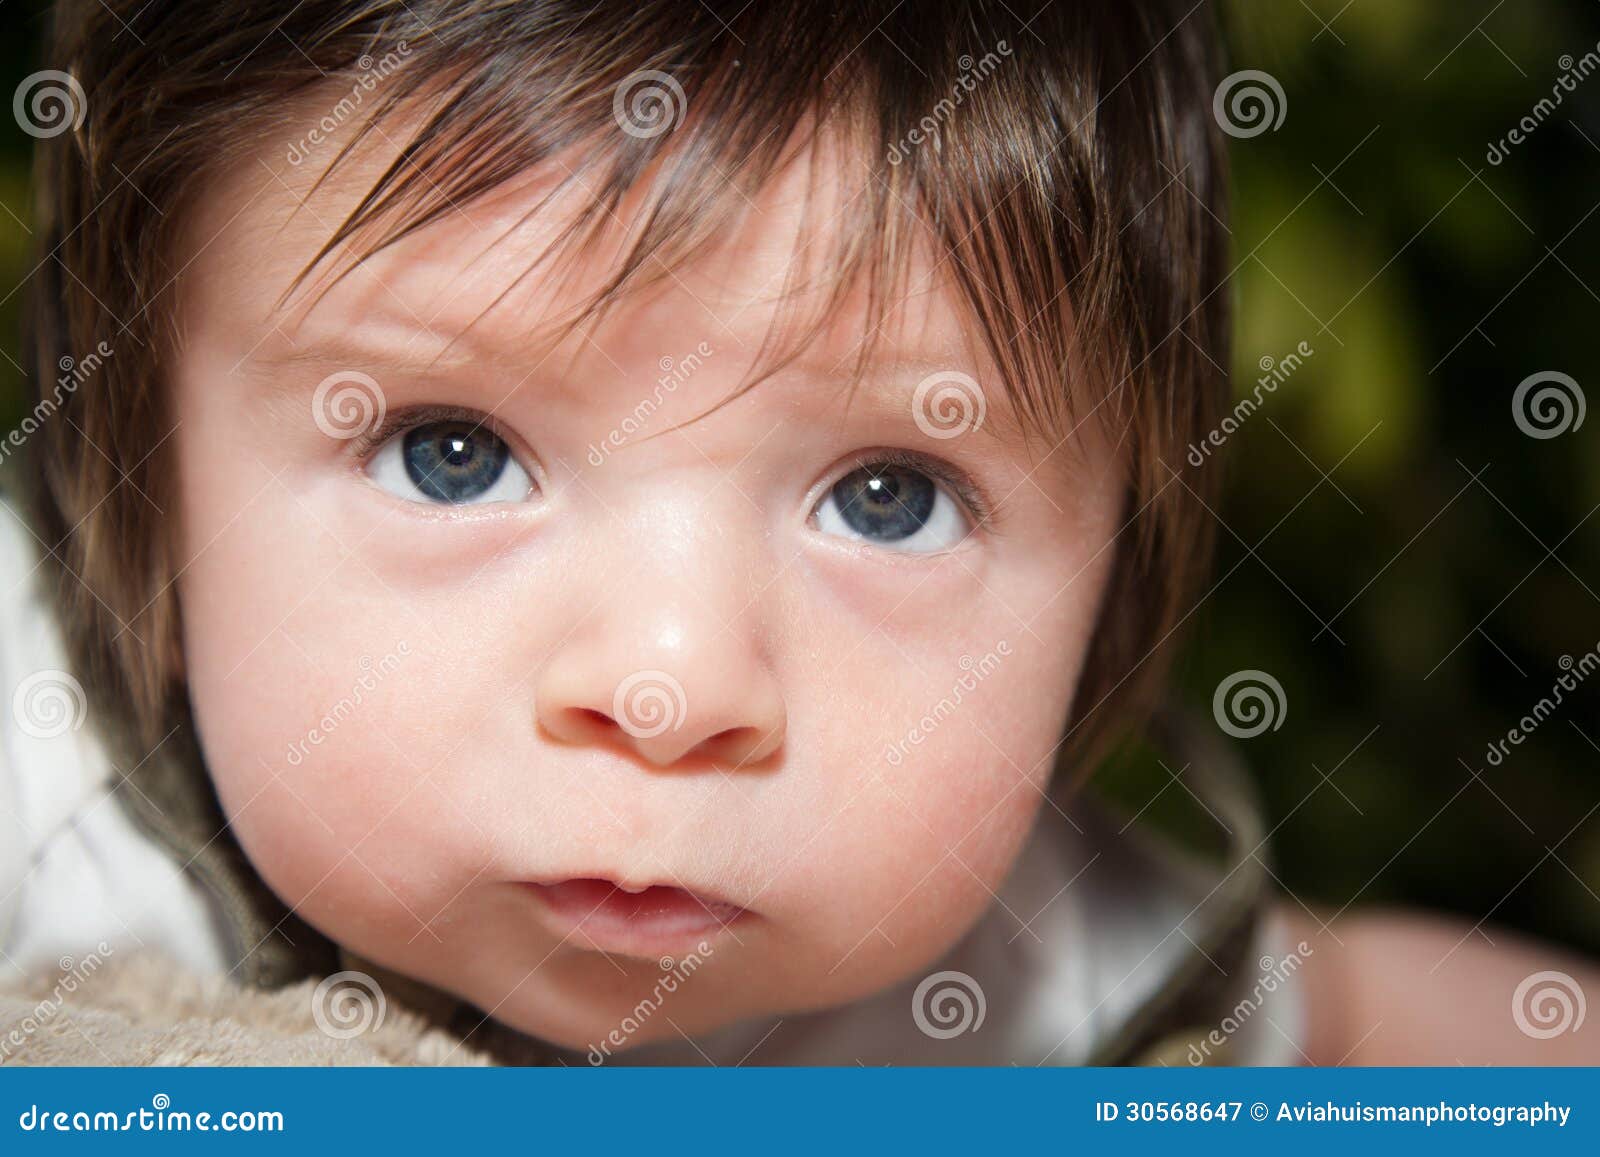 hair infant Facial has